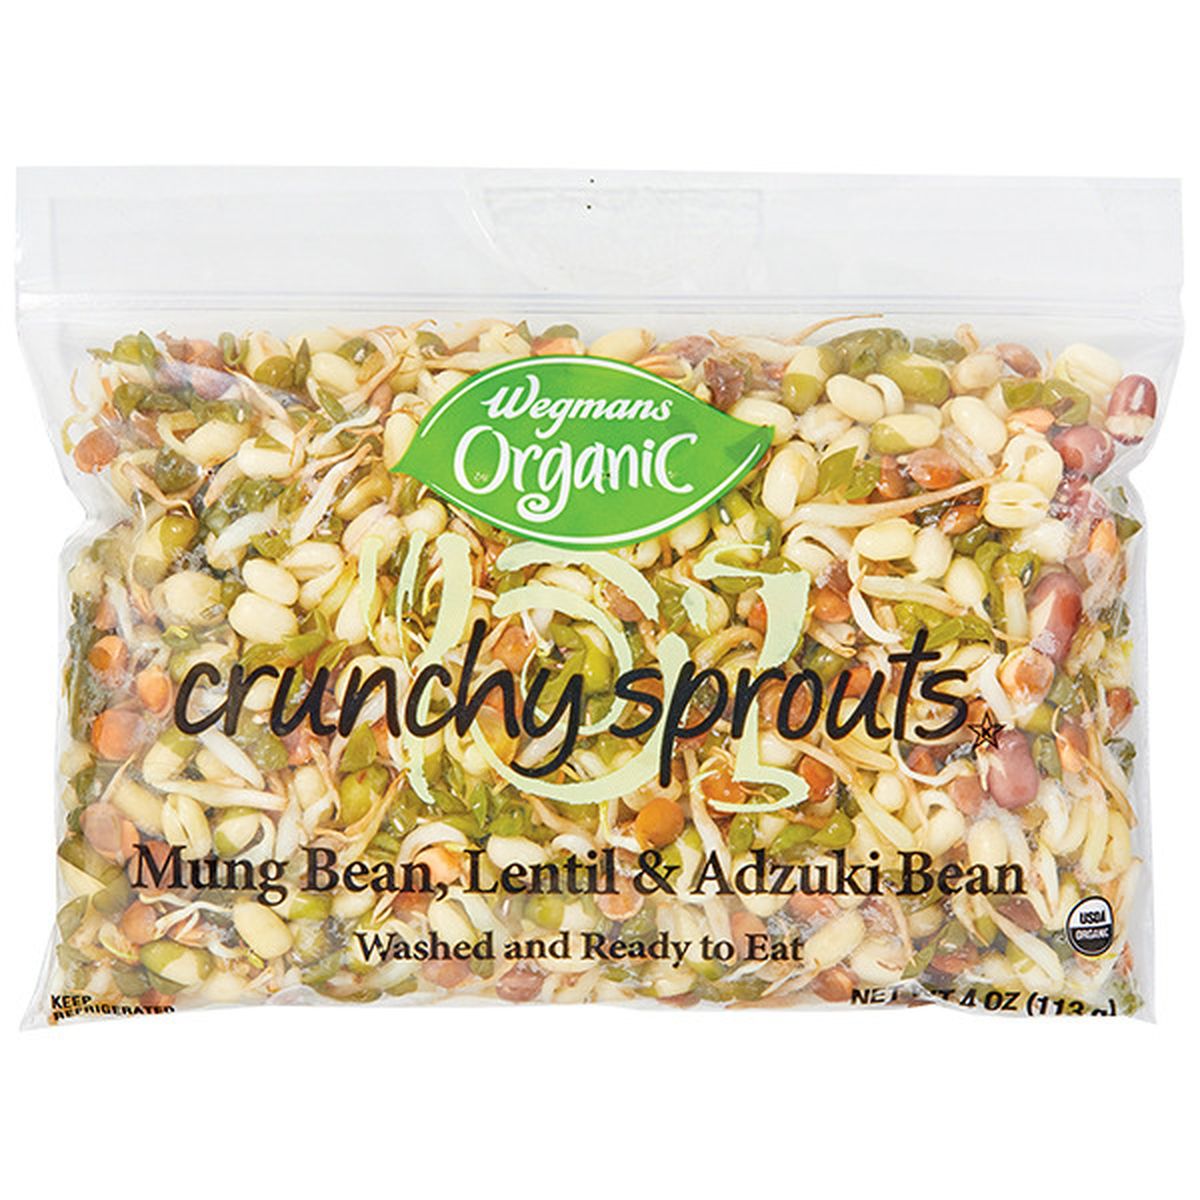 Calories in Wegmans Organic Crunchy Sprouts